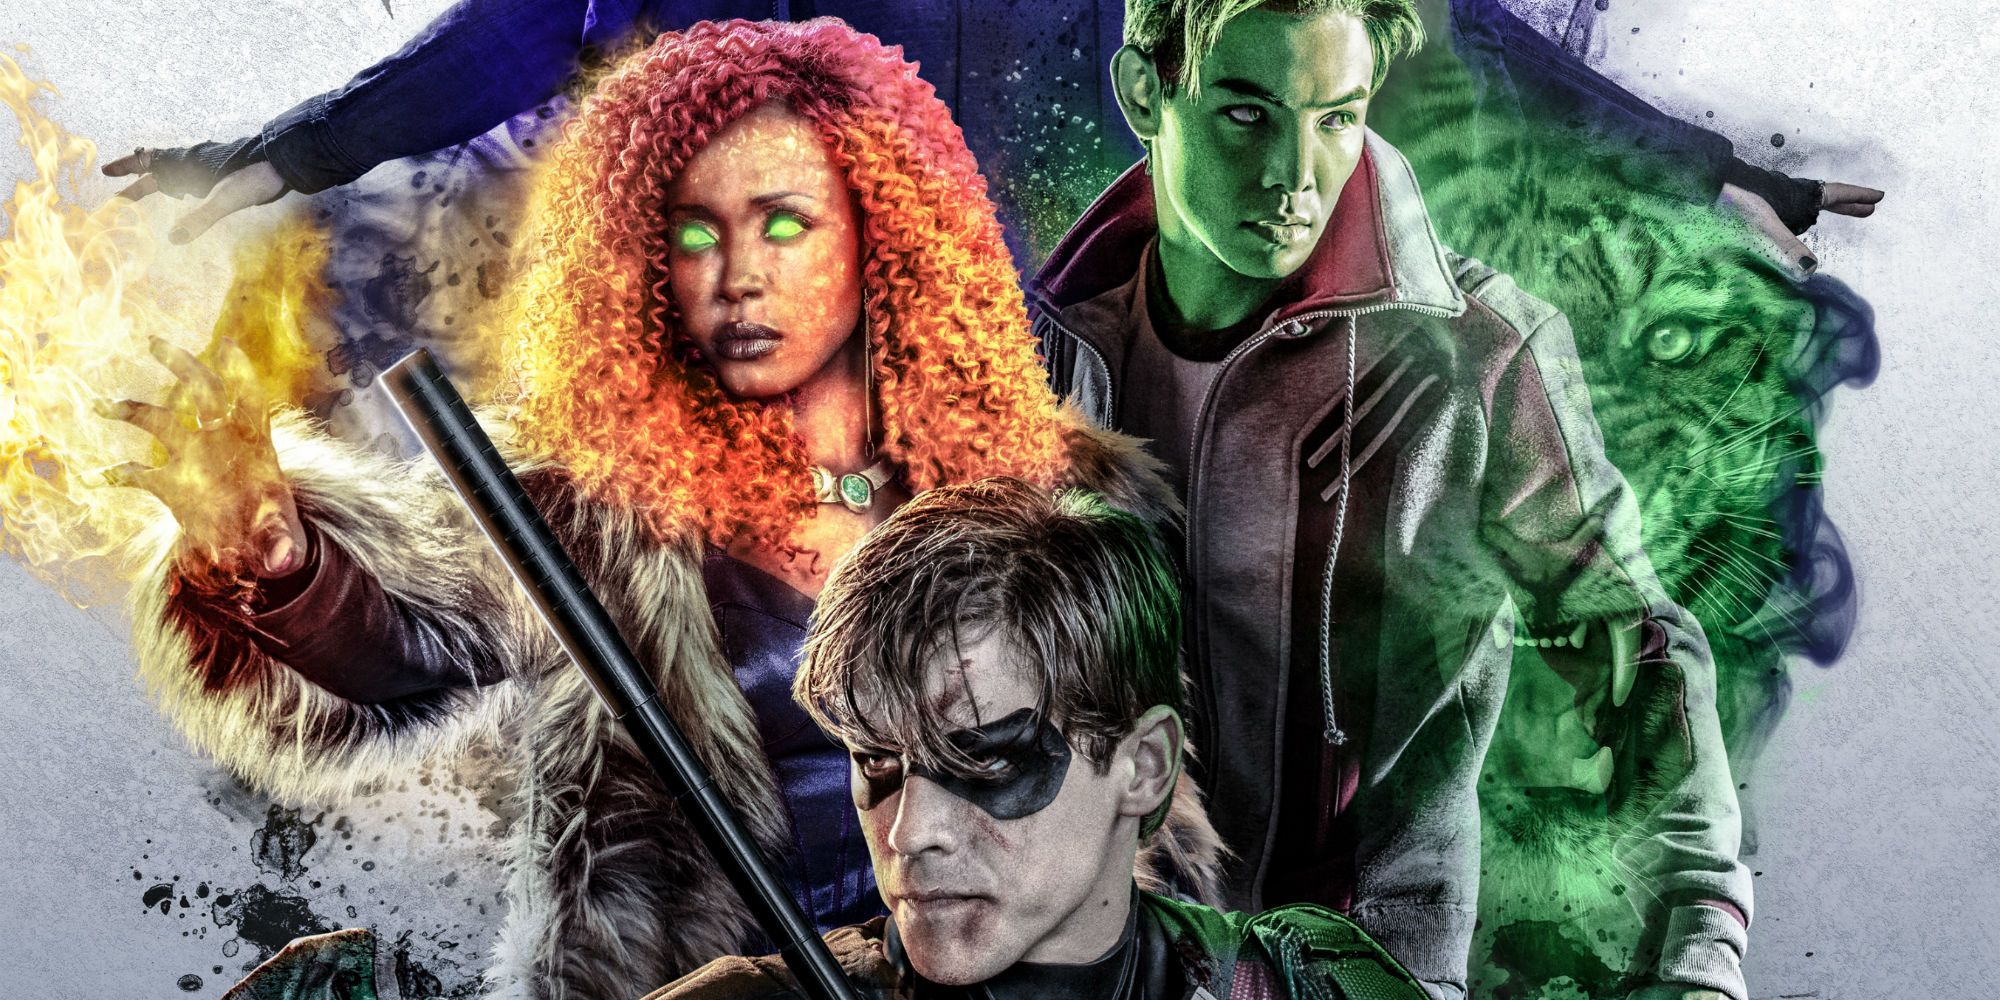 Titans tv show poster spotlights the dc superhero teams powers